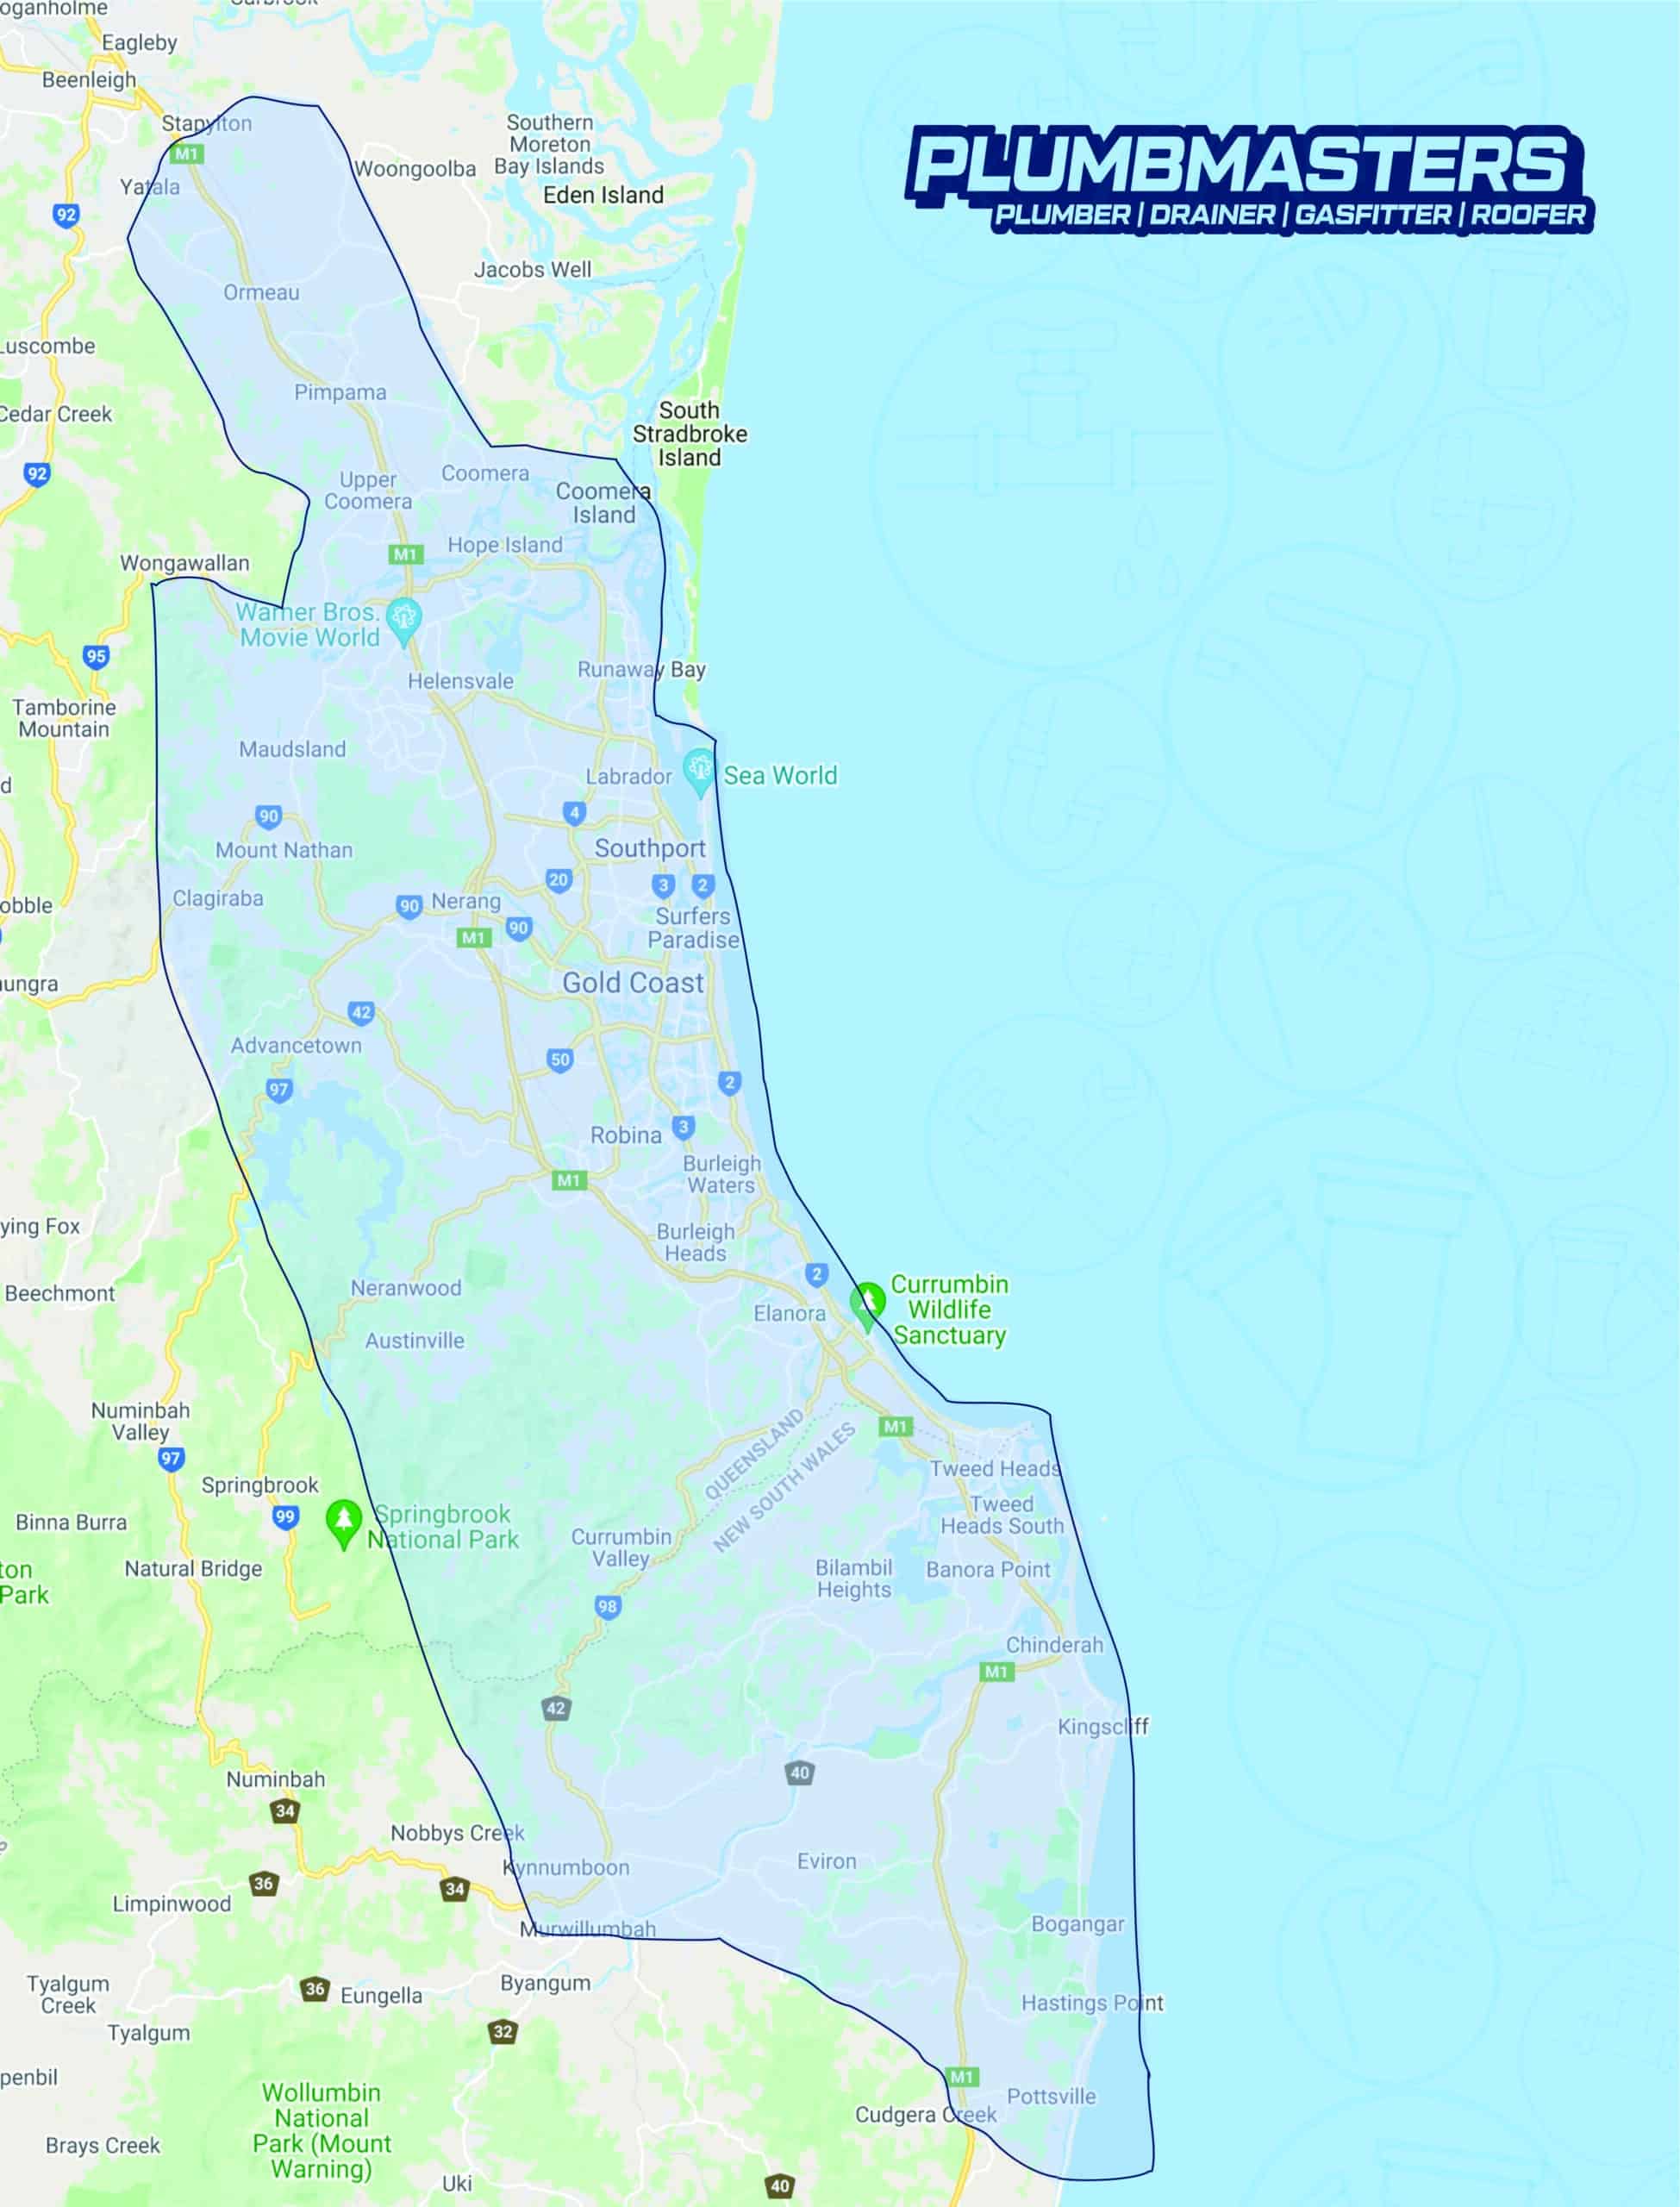 Plumbmasters Service Area map. Gold Coast and Tweed Coast